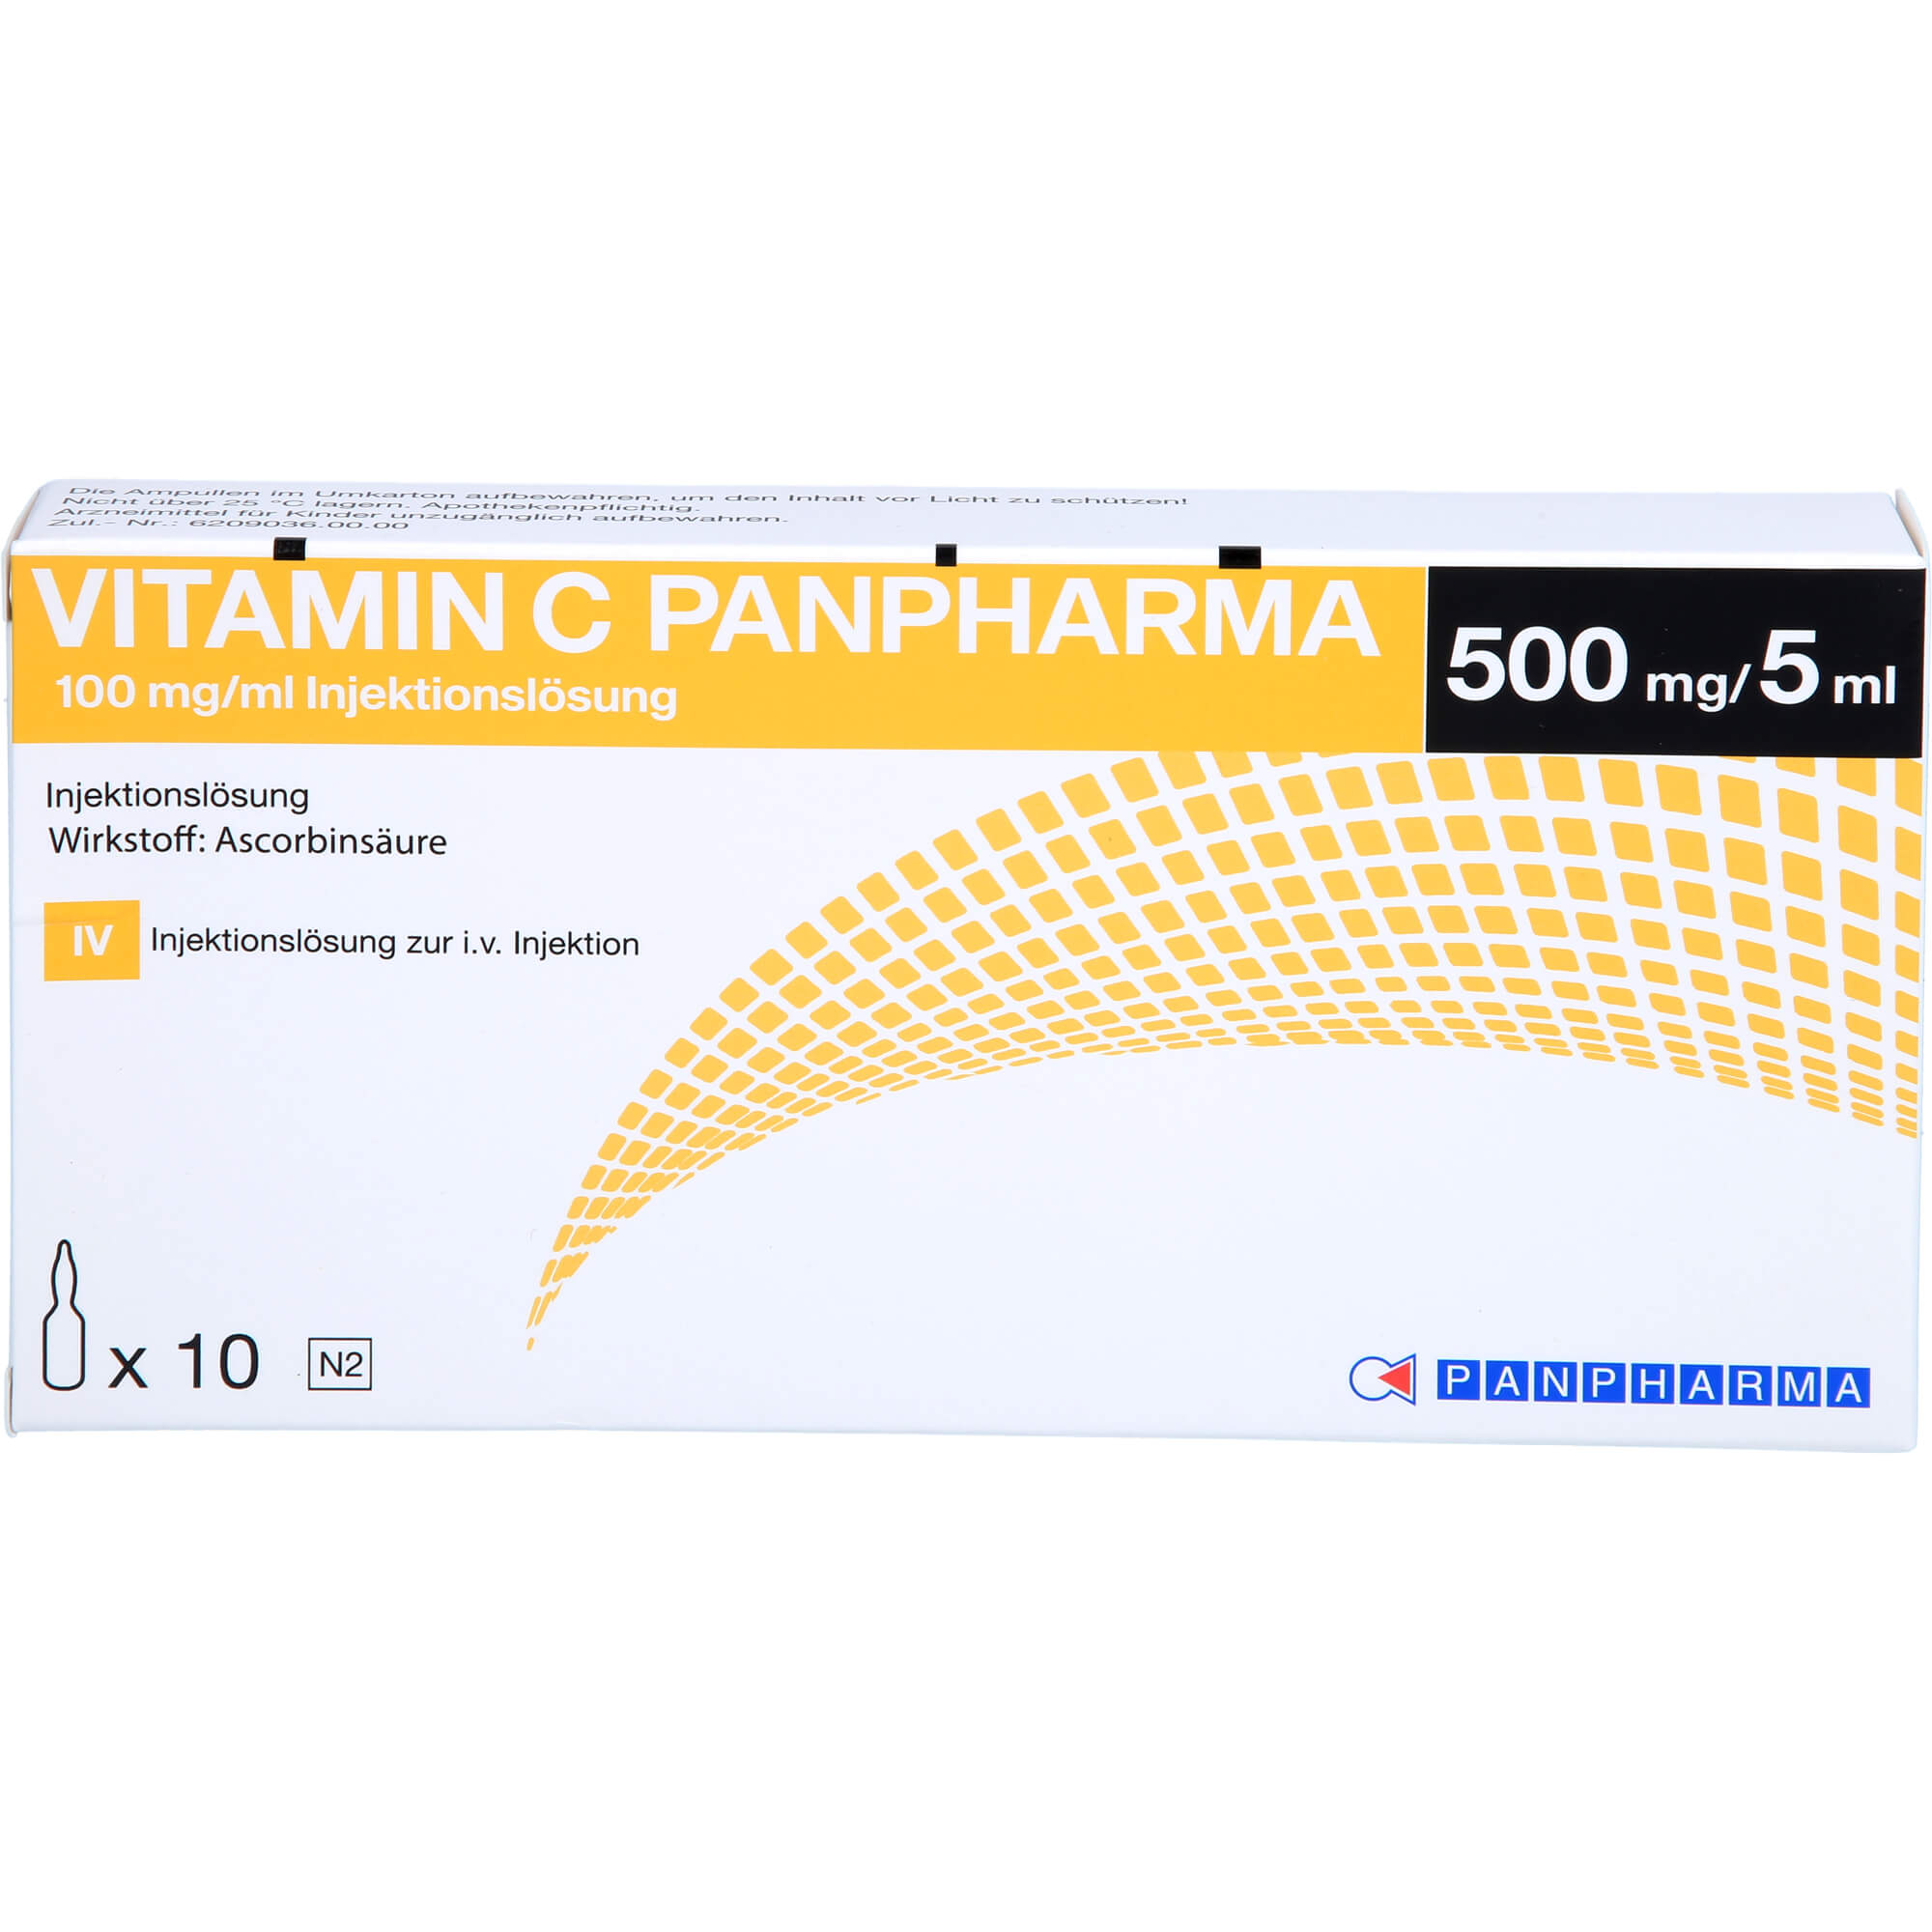 VITAMIN C PANPHARMA 100 mg/ml Injektionslösung